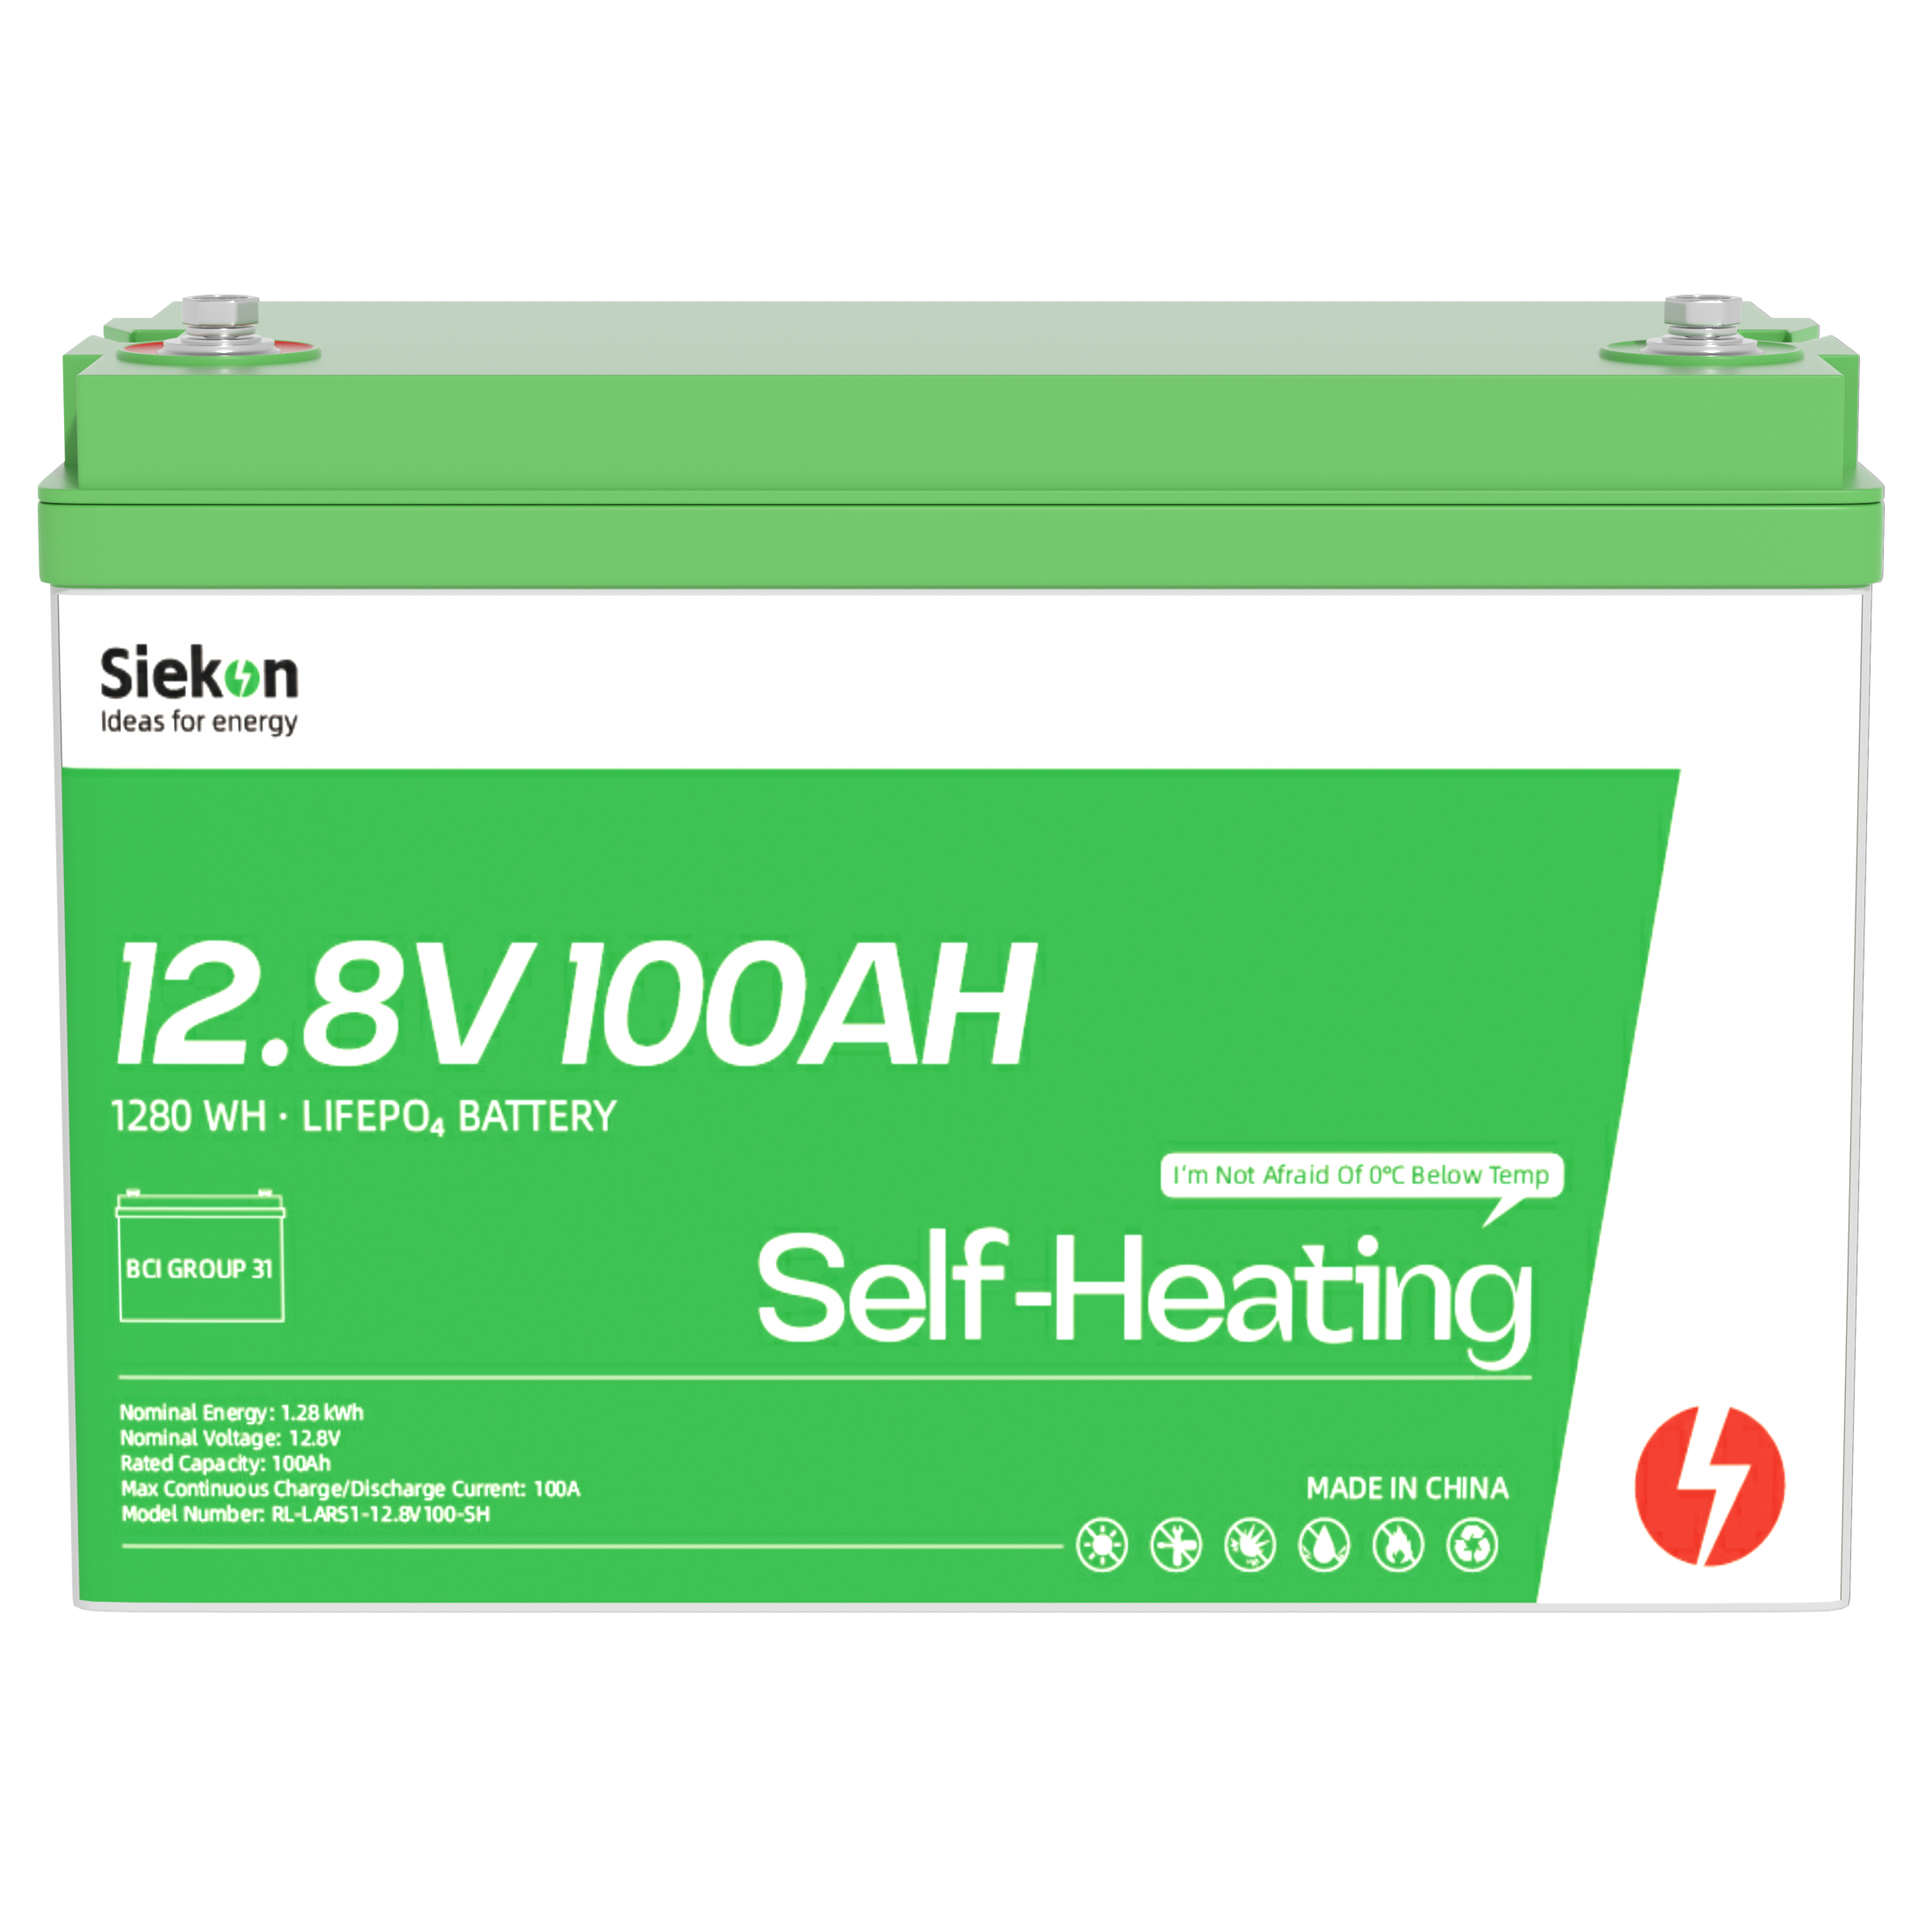 Siekon 12V 100Ah LiFePO4 battery | Self-Heating